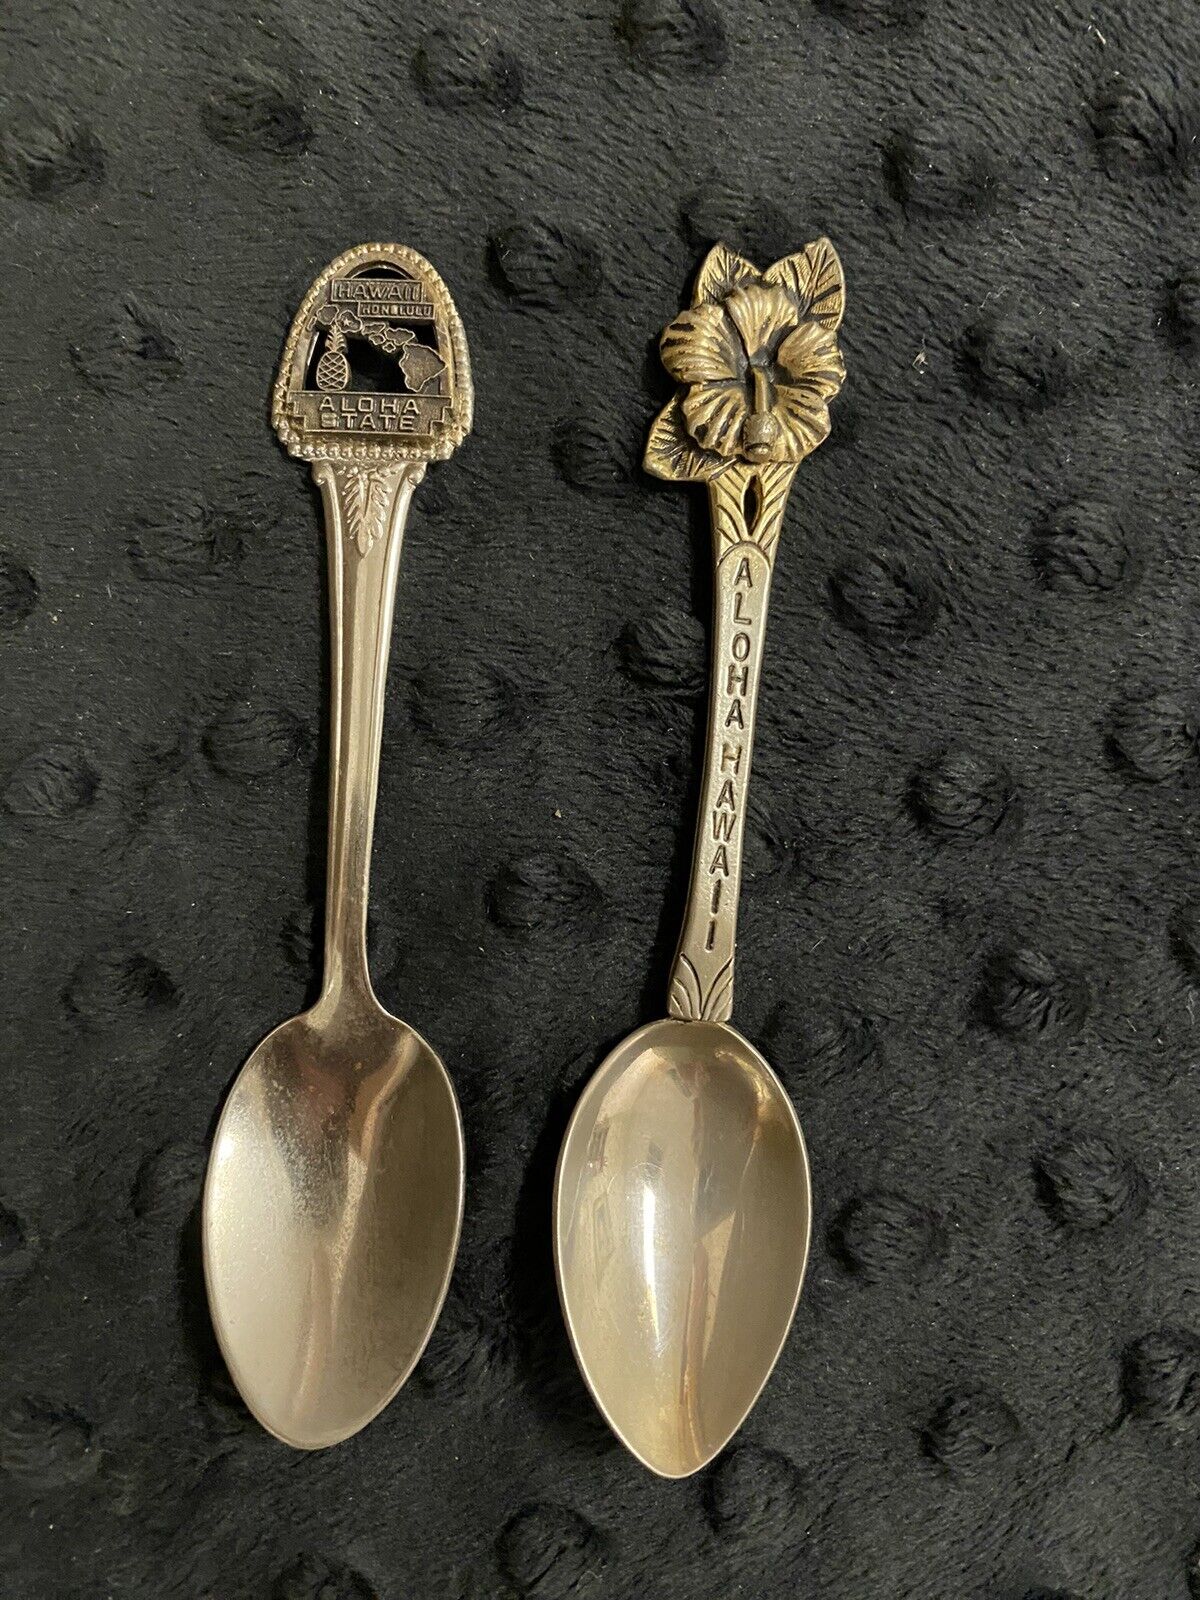 Lot of 2 Vintage Hawaii Souvenir Spoons